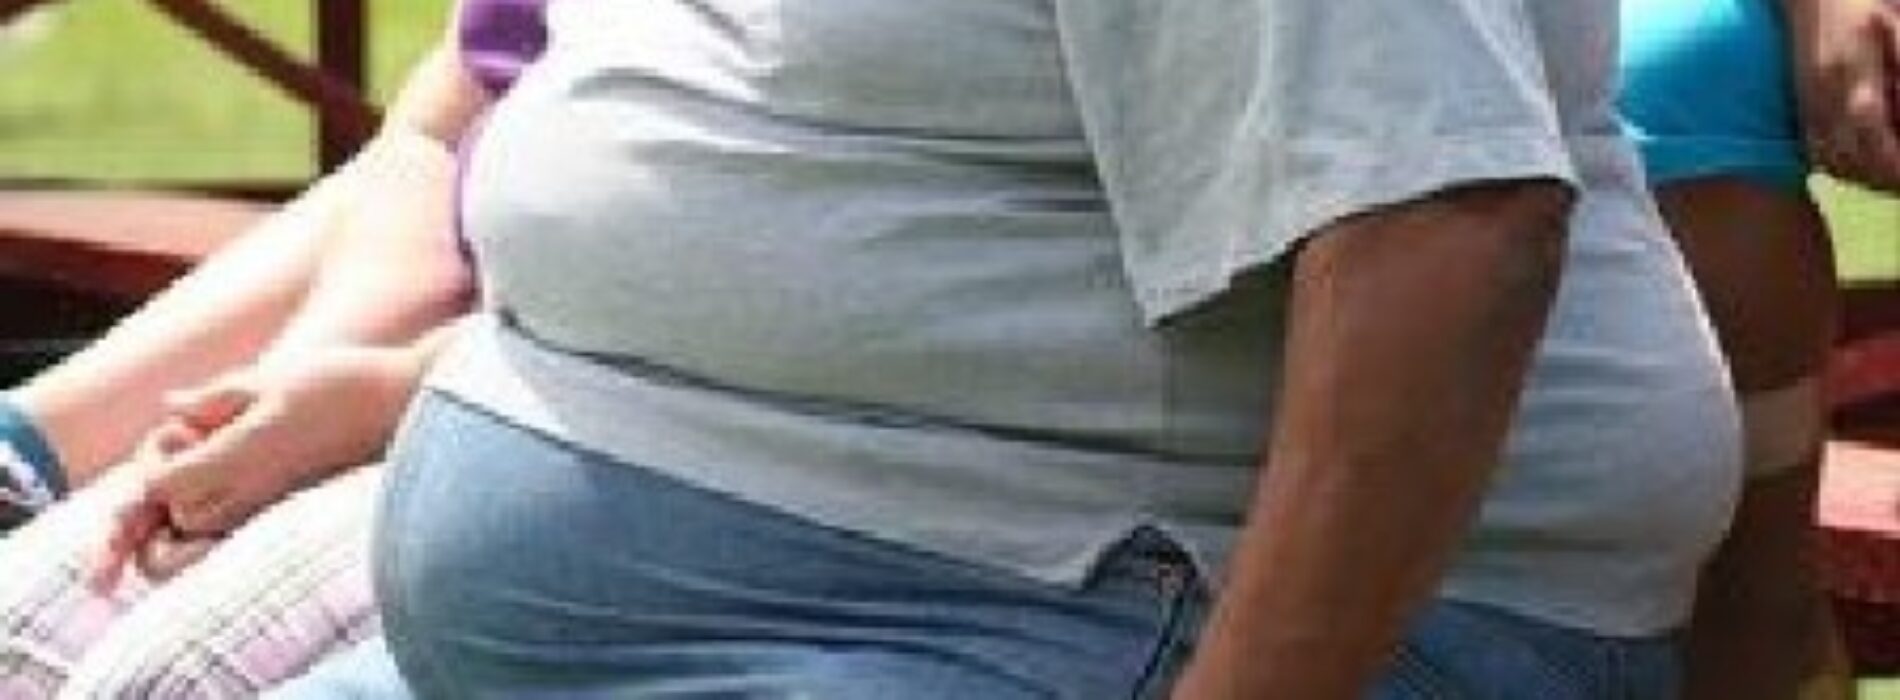 Obesity rising in Africa